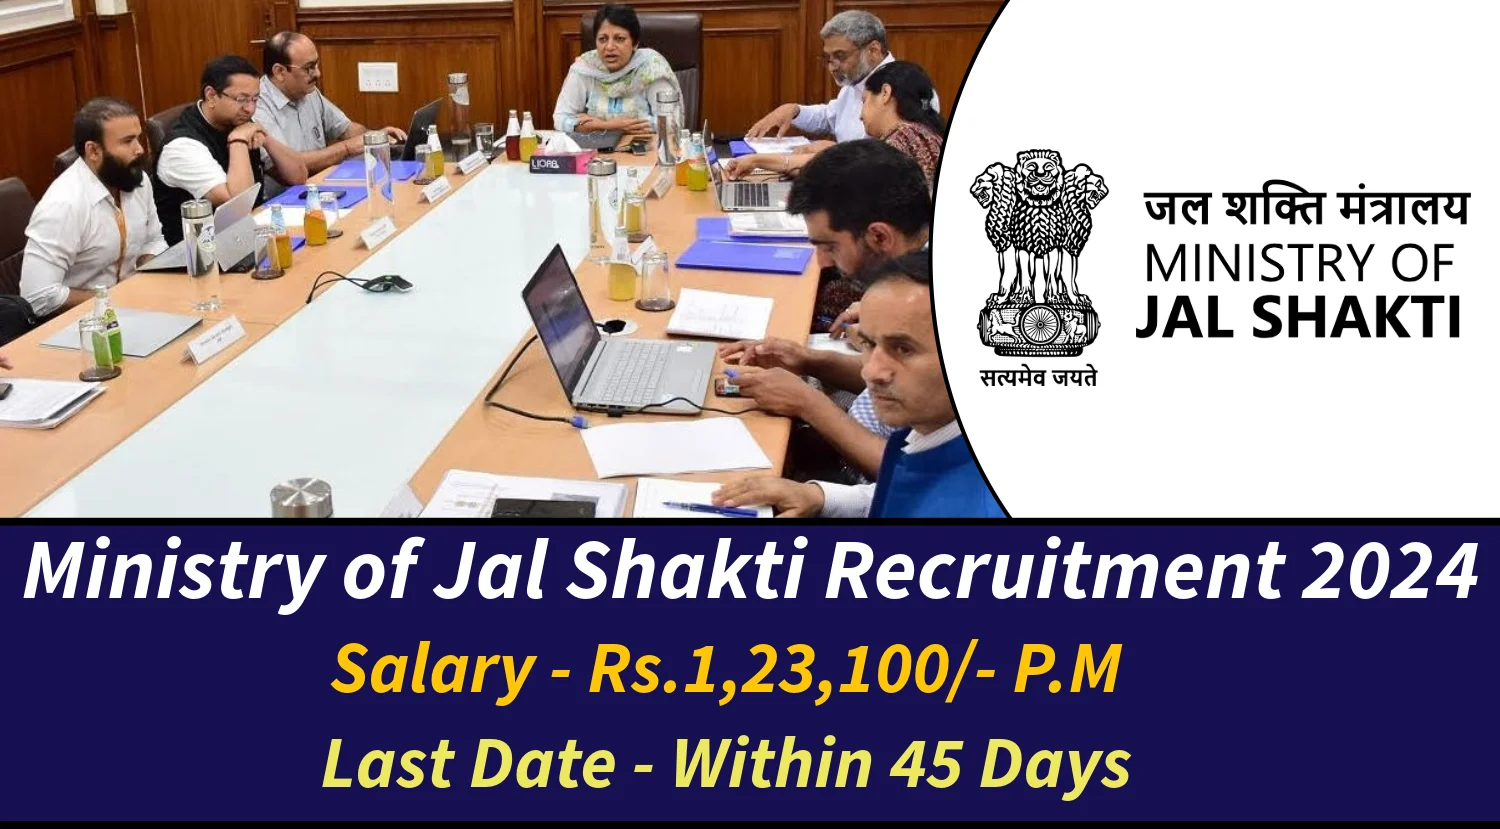 Ministry of Jal Shakti Recruitment 2024